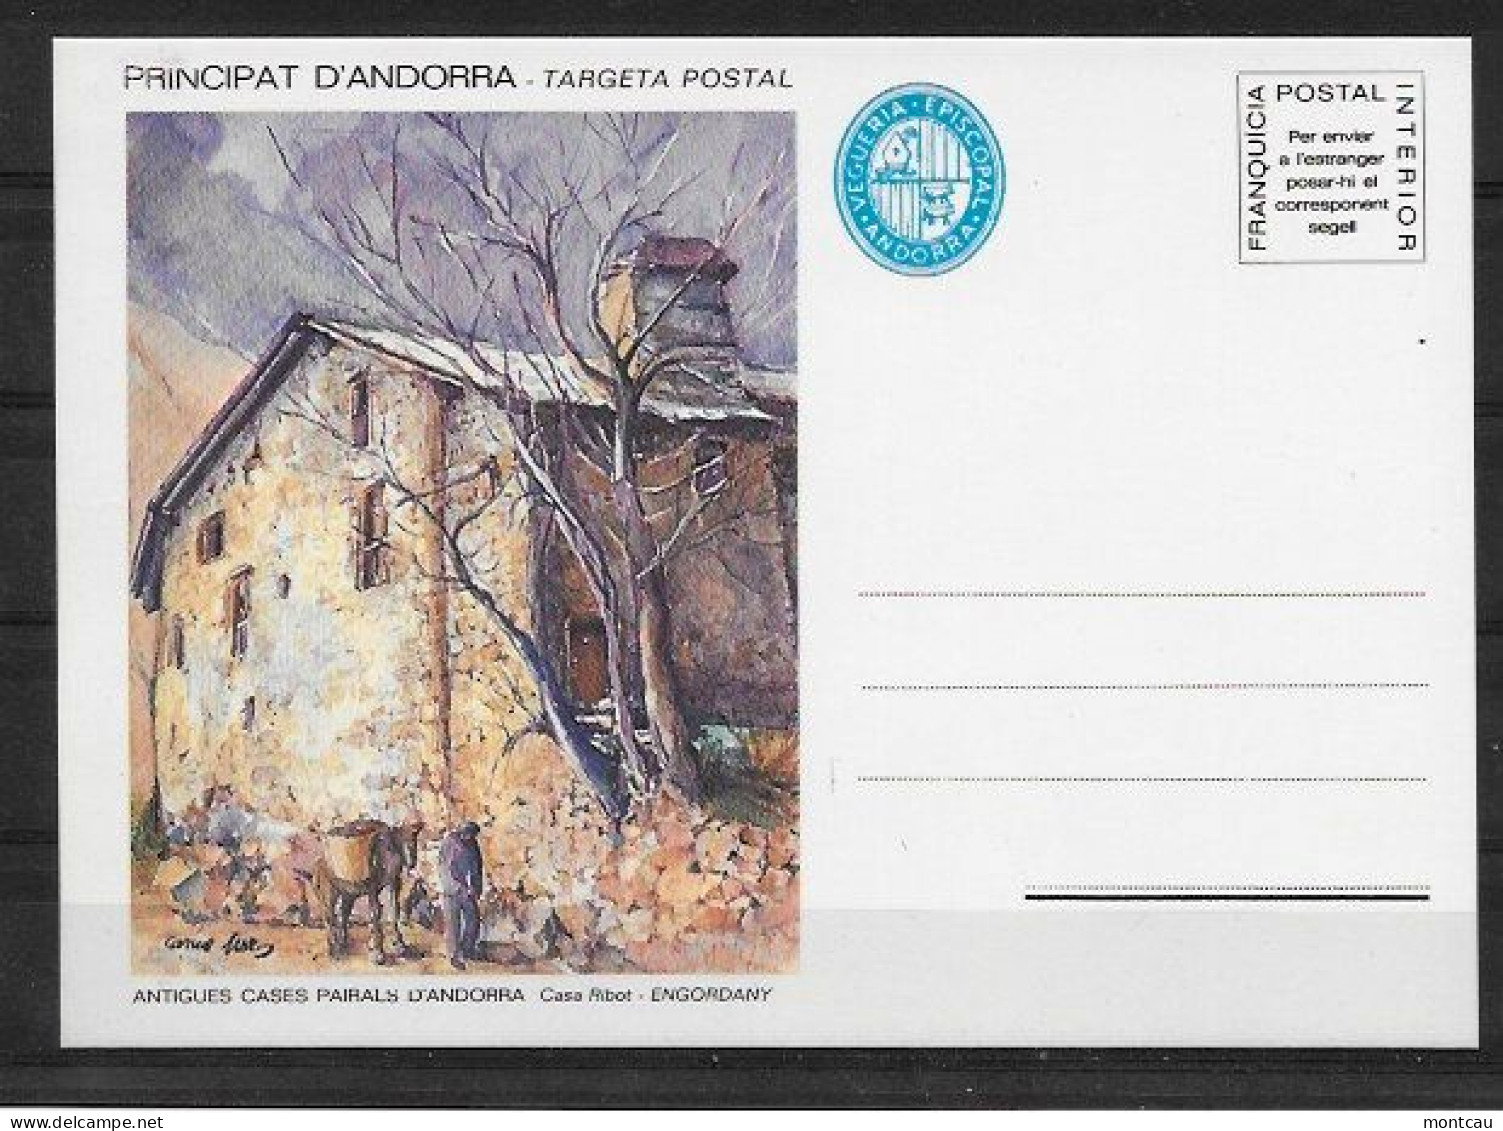 Andorra - Franquicia Postal -Engordany - Episcopal Viguerie